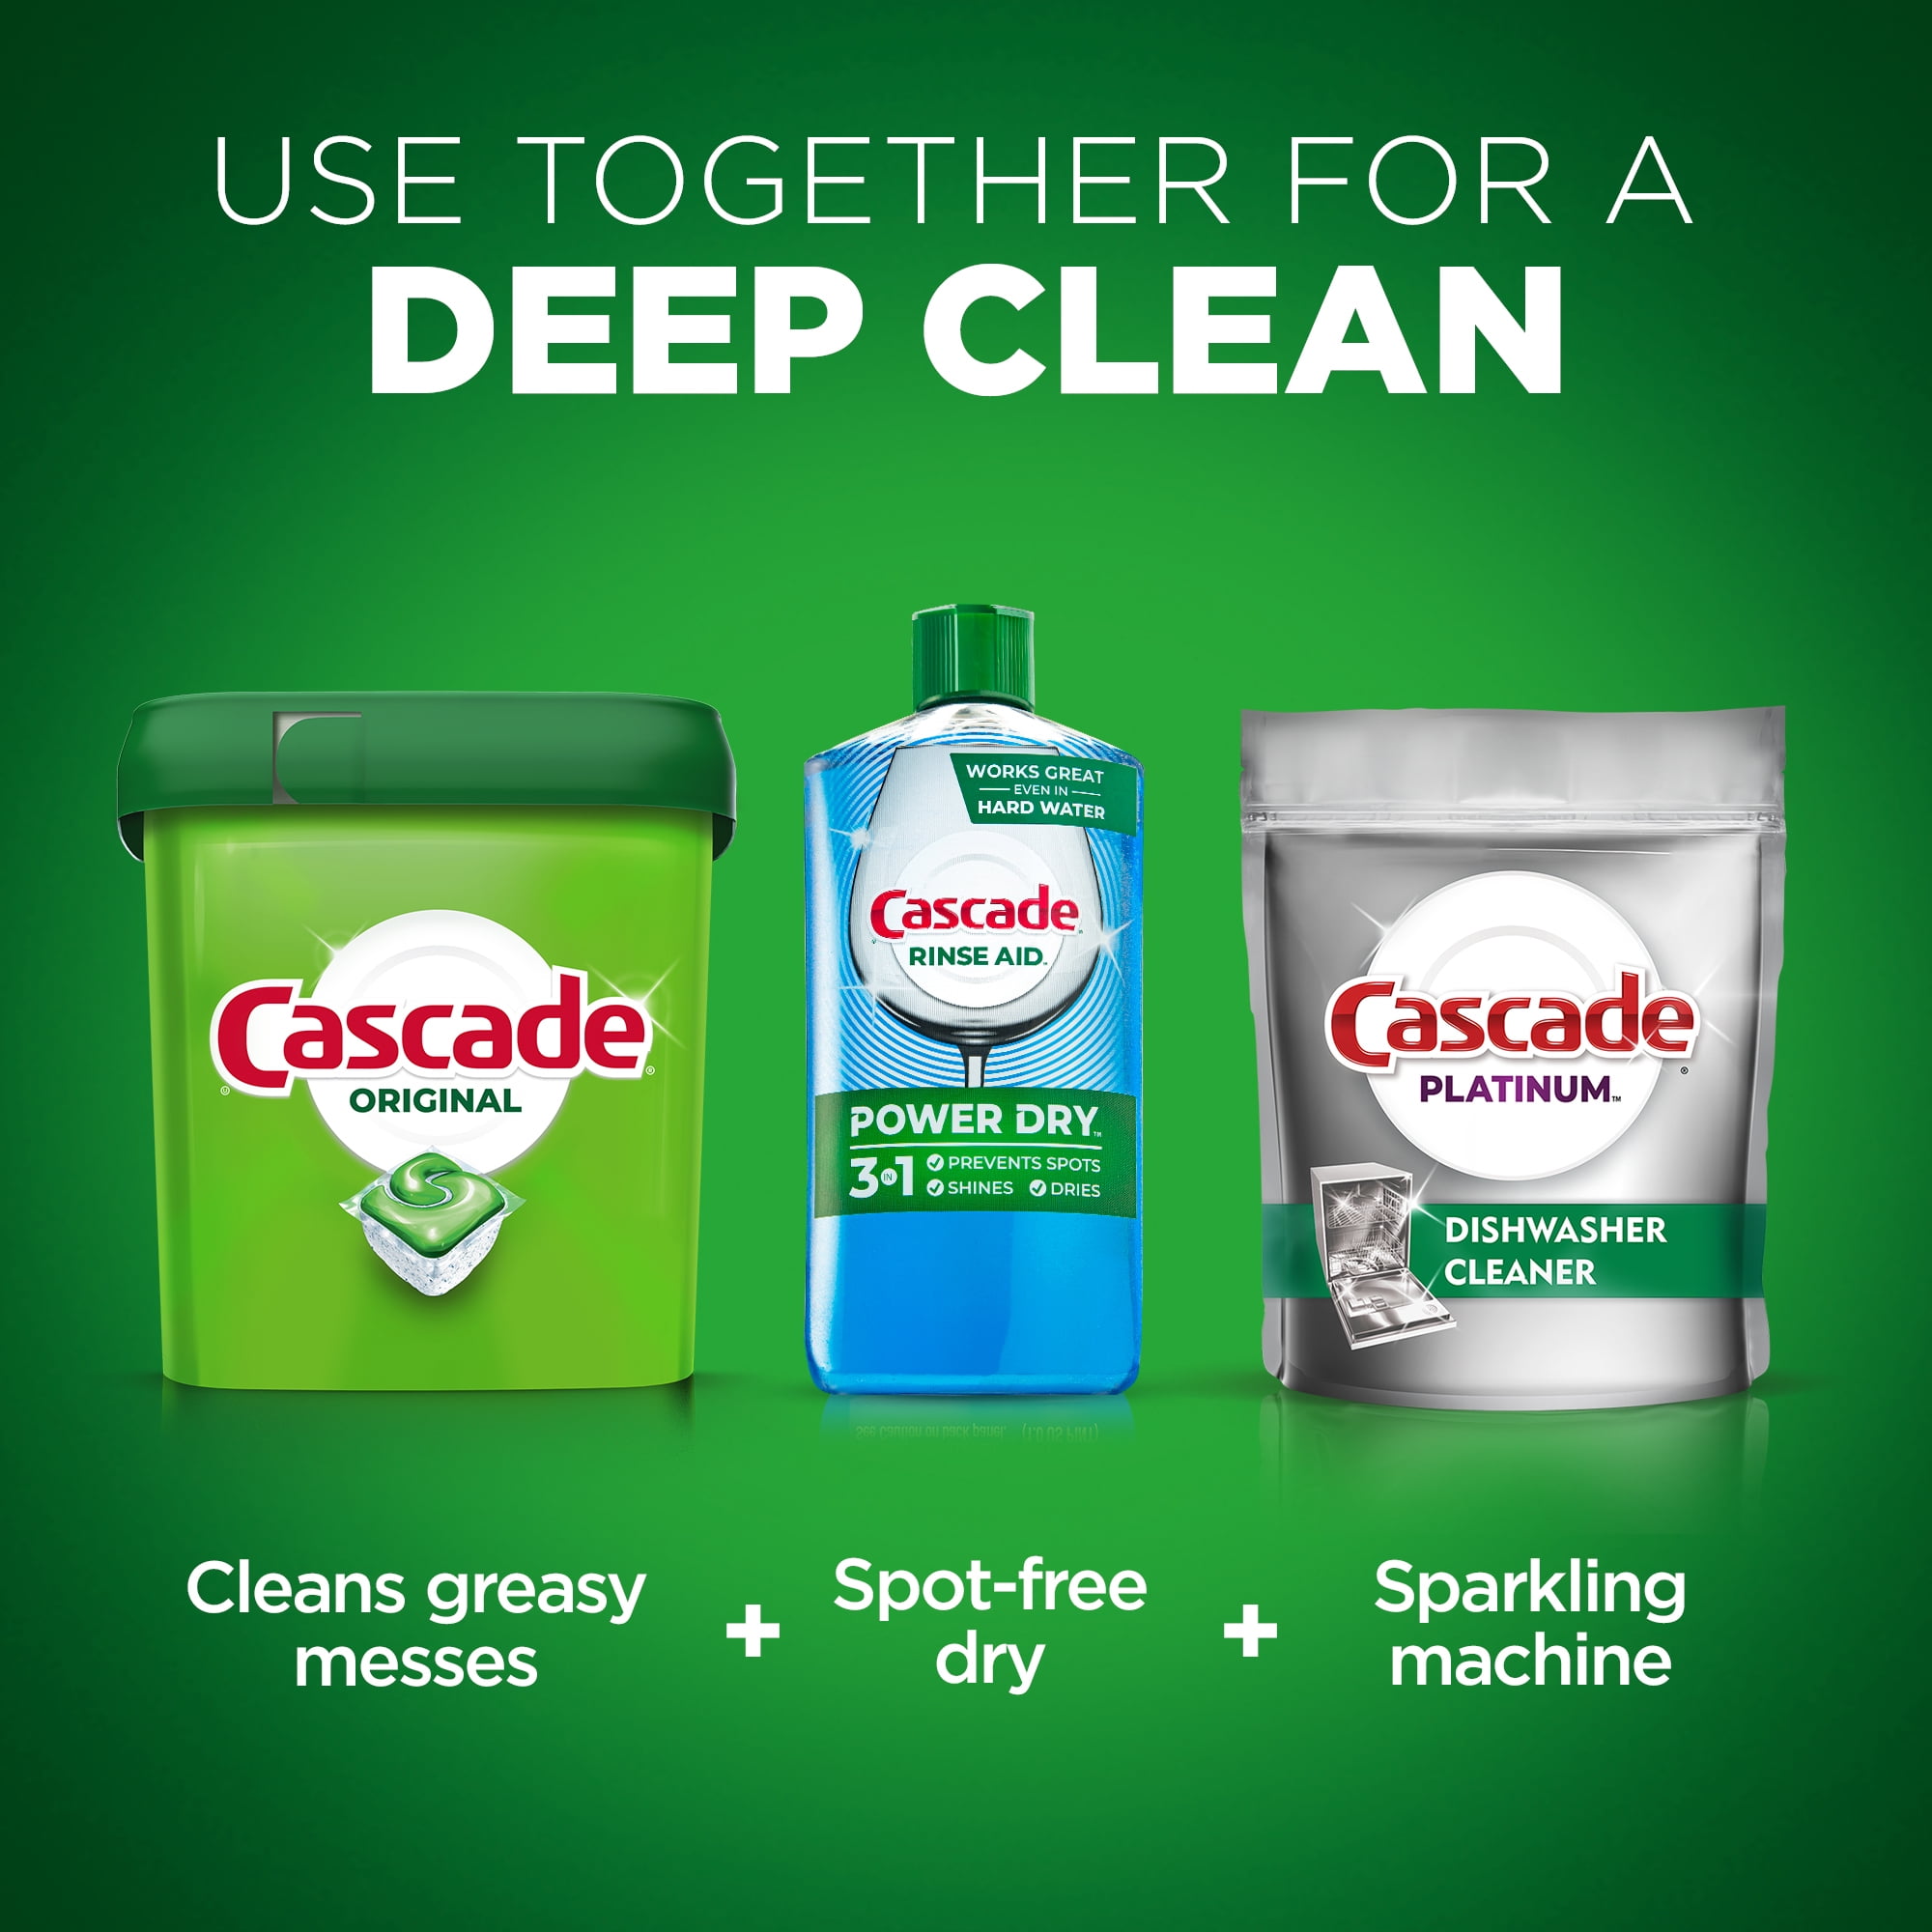 Cascade Dishwasher Detergent, Fresh Scent, Original, ActionPacs